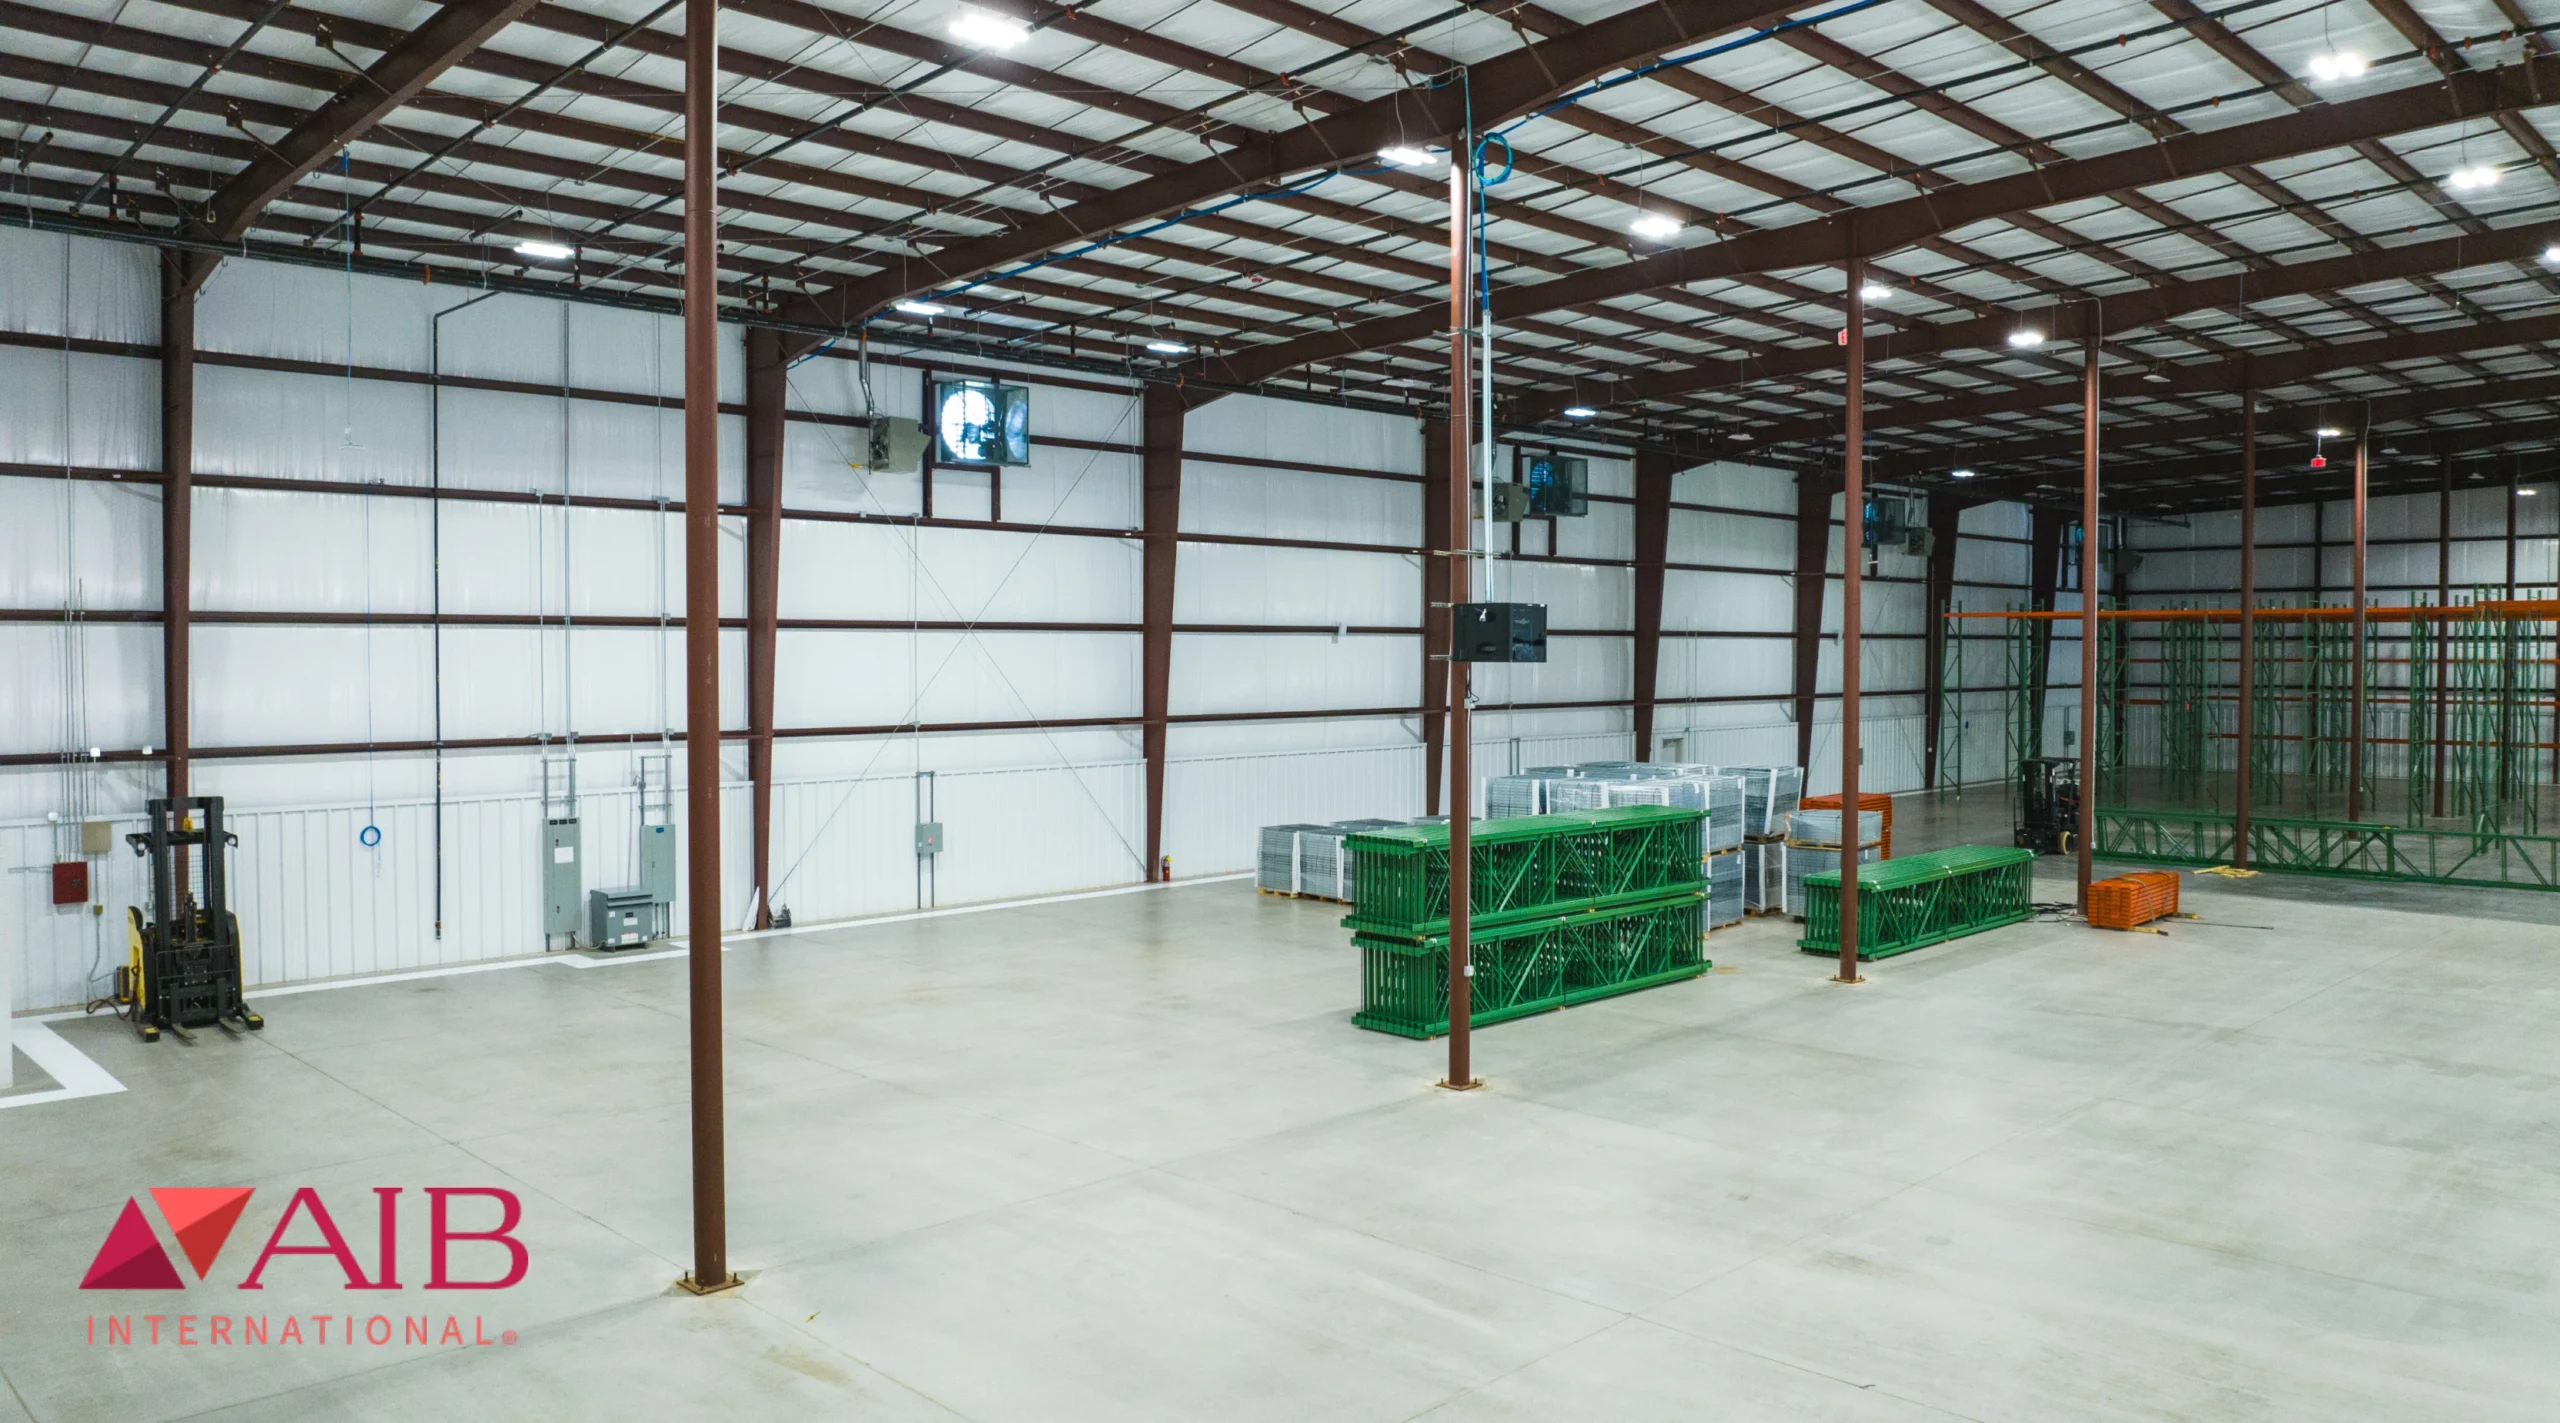 AIB certified food grade warehousing facility near Charlotte